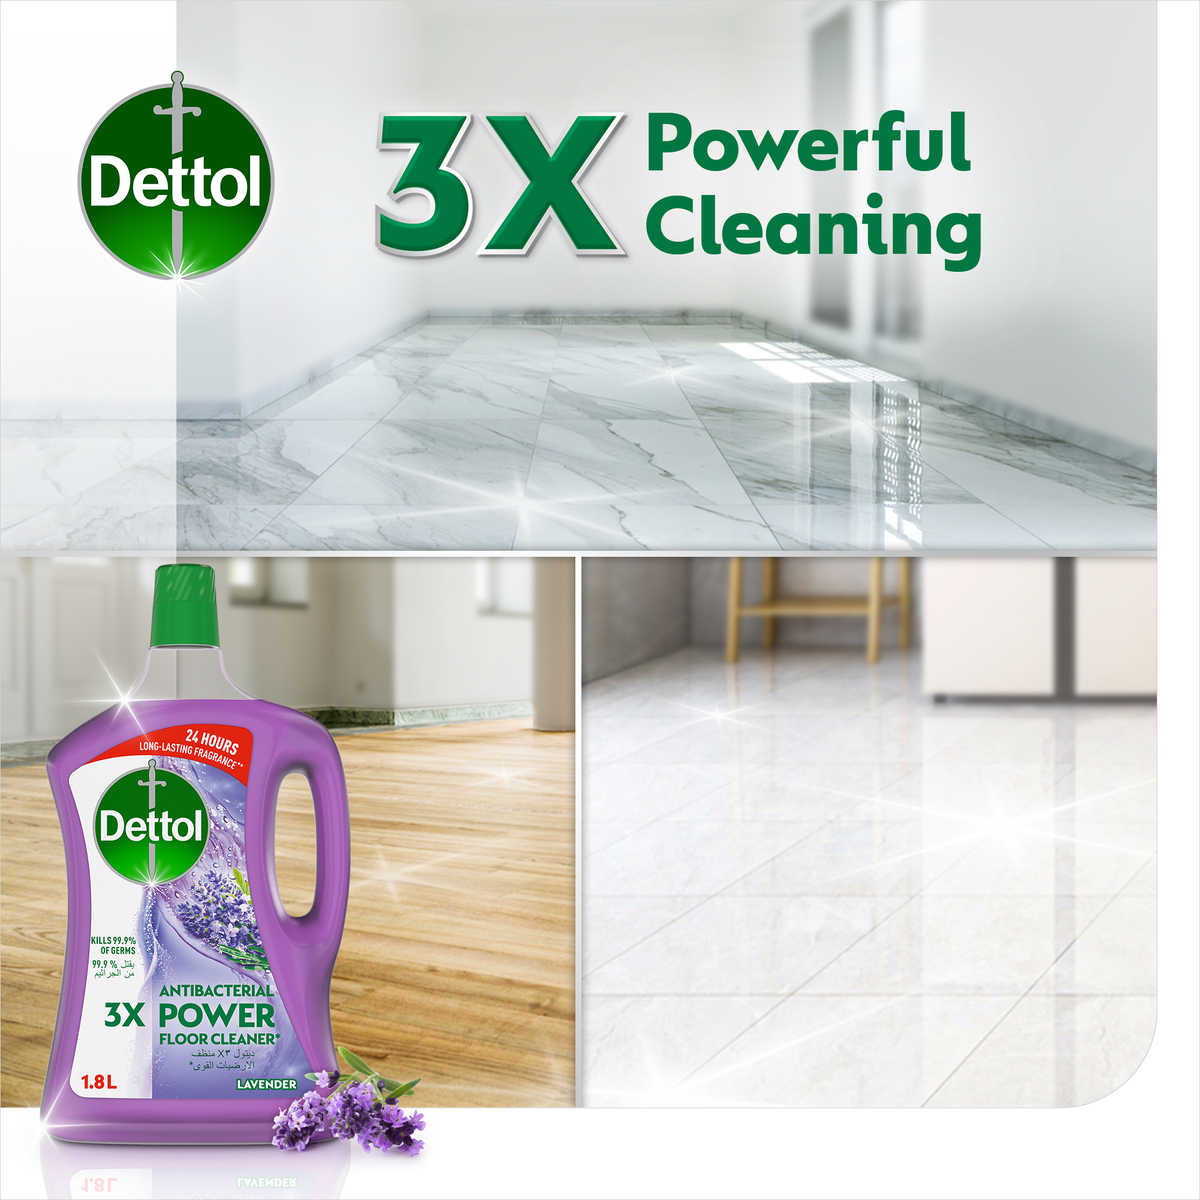 Dettol Lavender Power Antibacterial Floor Cleaner Value Pack 2 x 1.8Litre